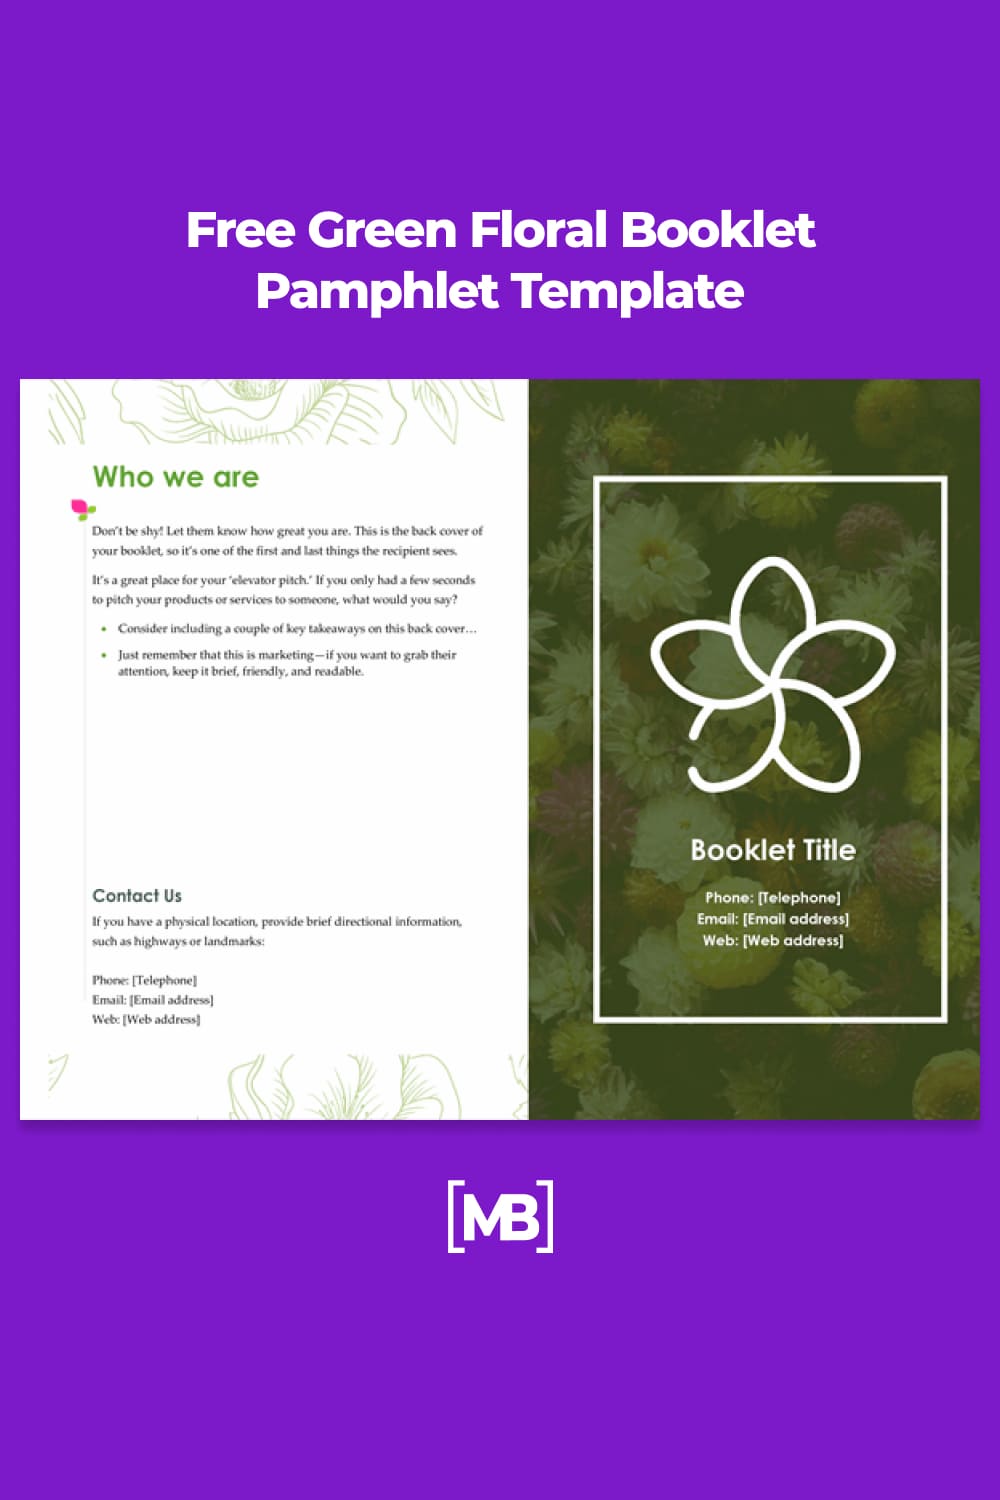 Green floral booklet pamphlet template.